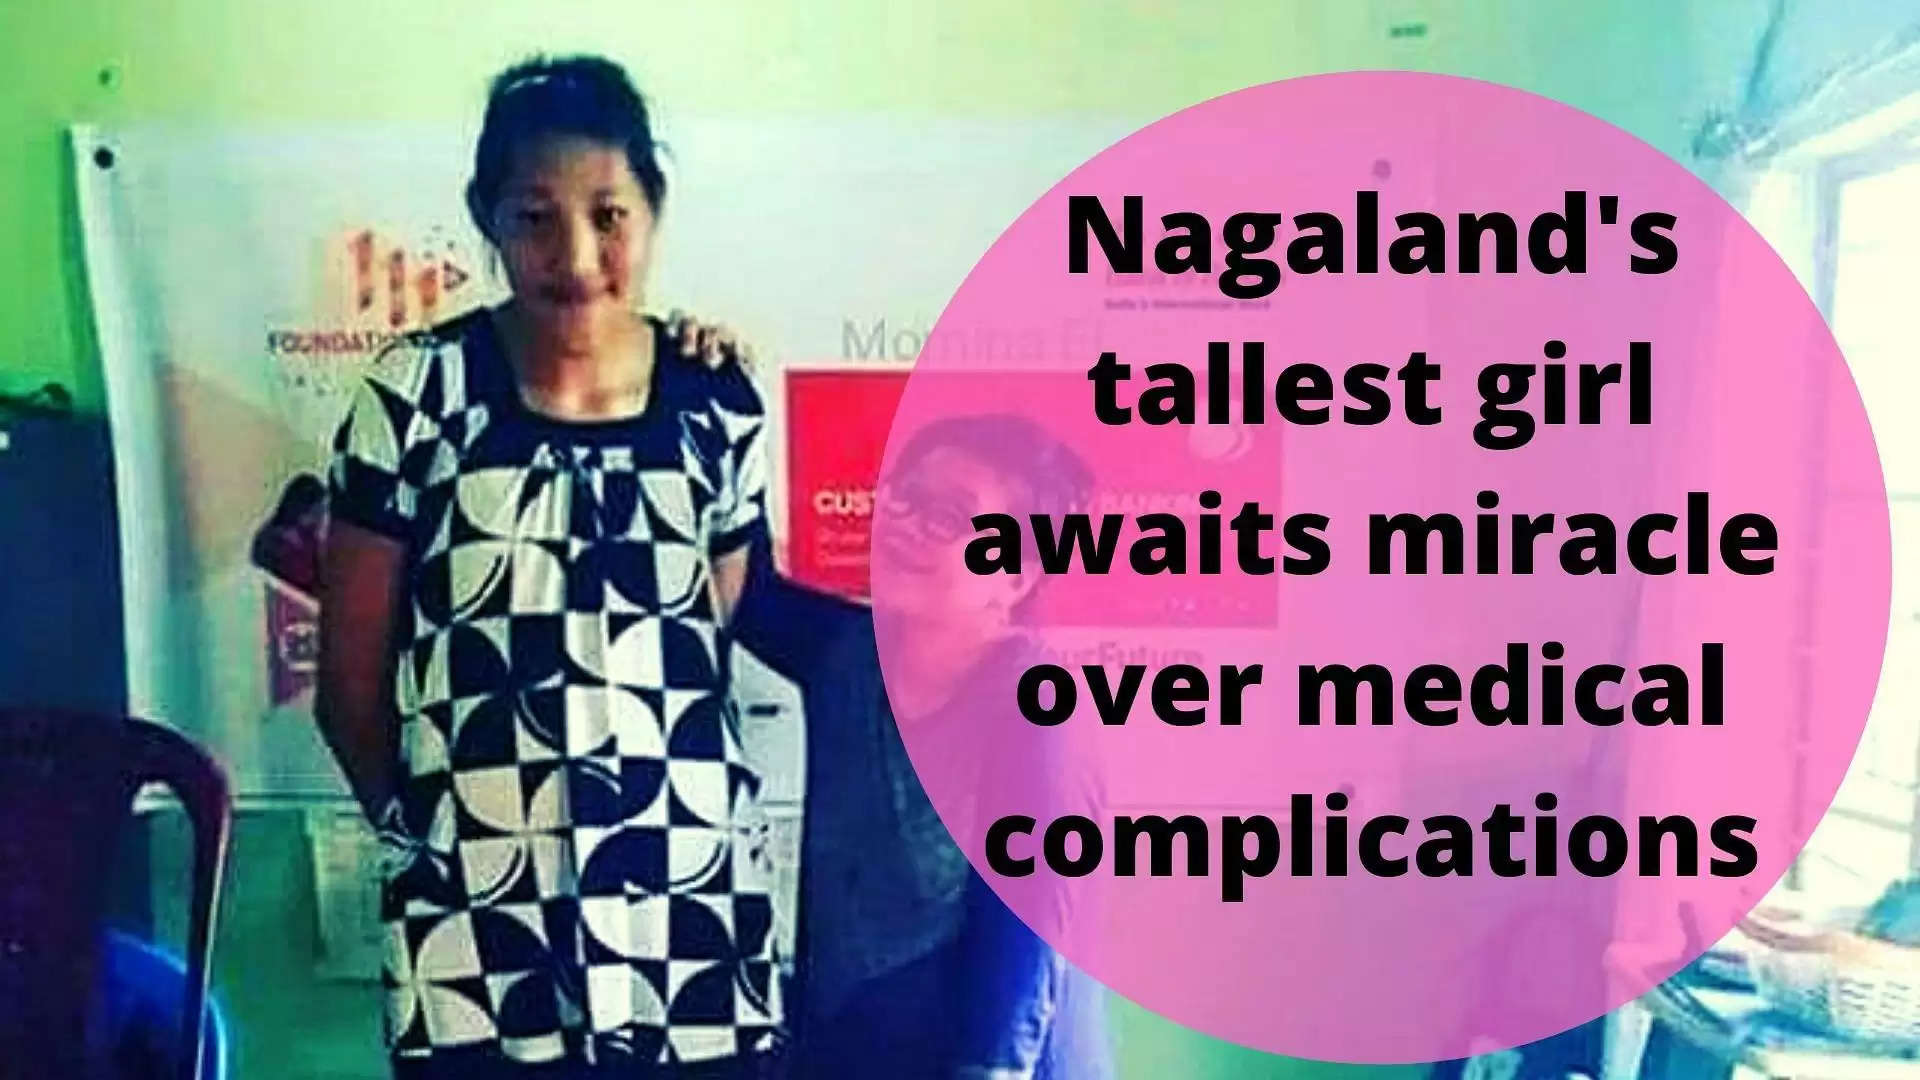 Nagaland's tallest girl awaits miracle over medical complications